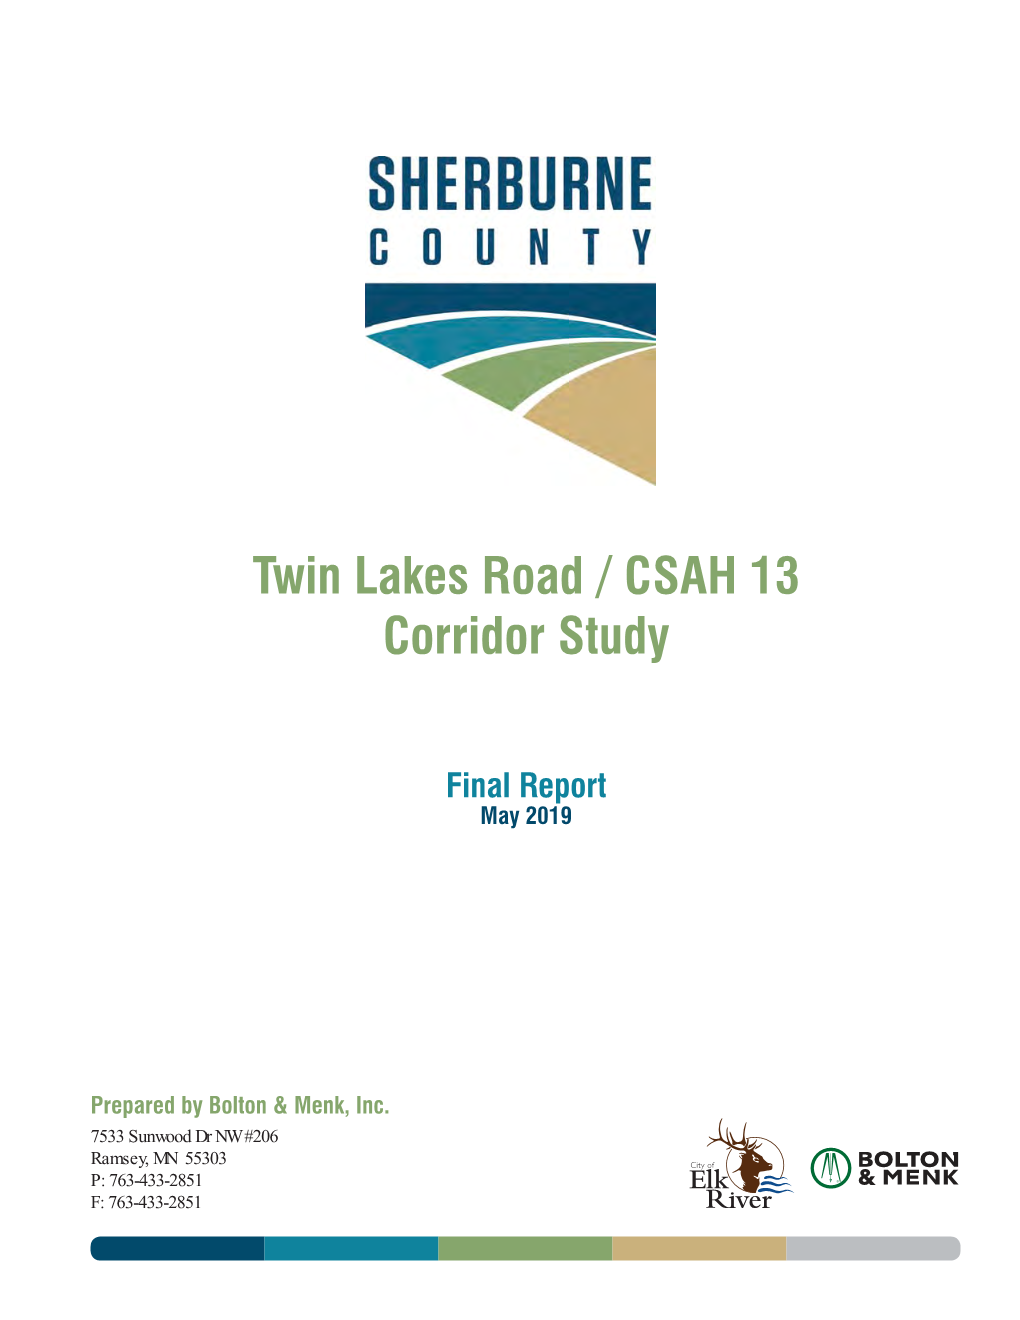 Twin Lakes Road / CSAH 13 Corridor Study